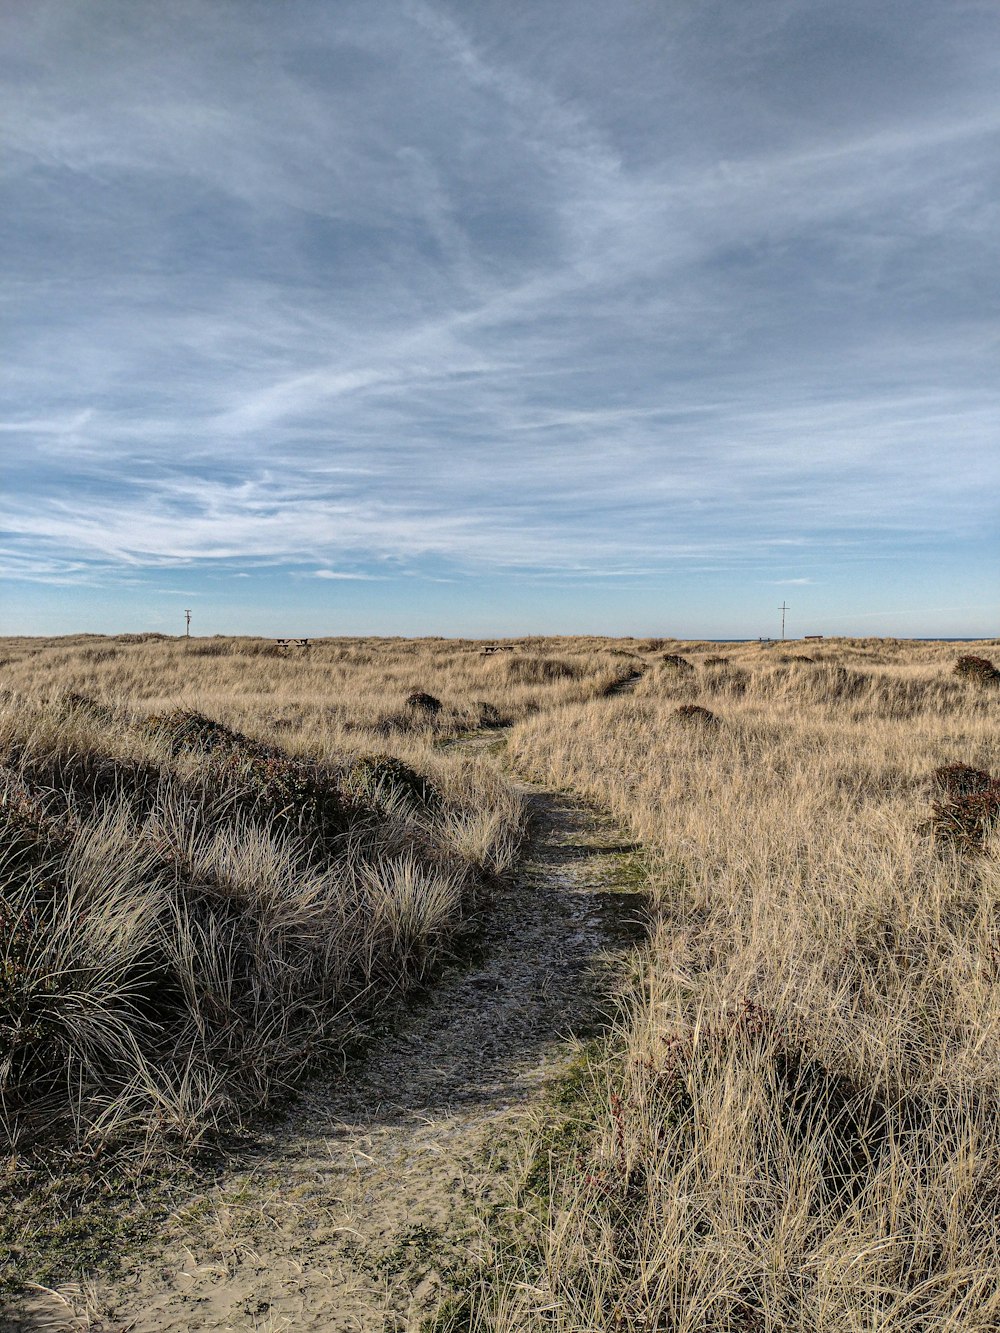 a dirt path in a dry grass field